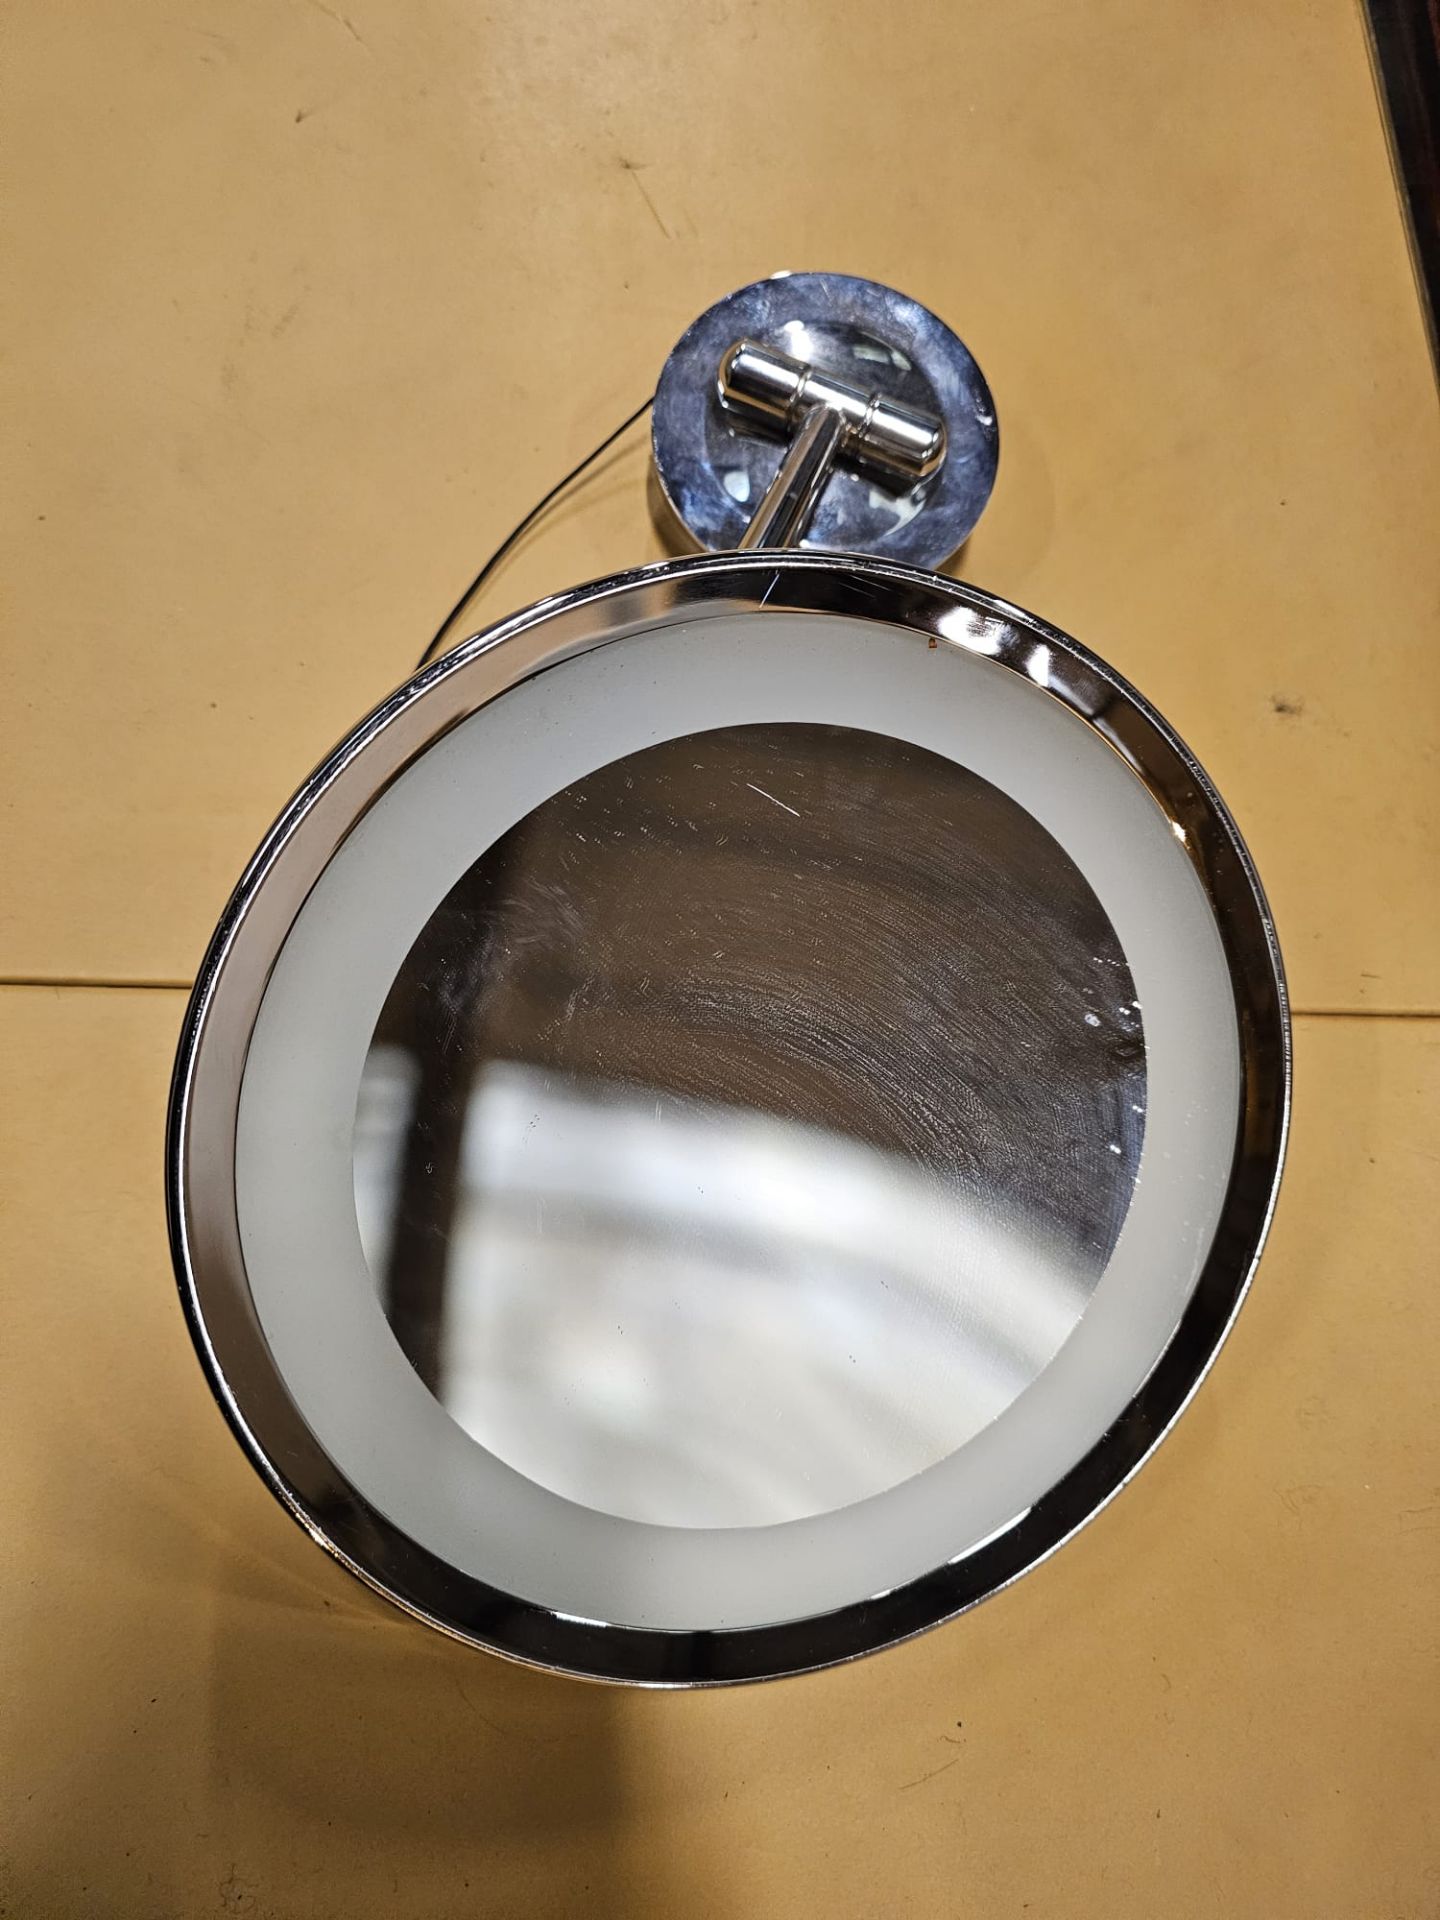 LED Illuminated Magnifying Vanity Mirror For Bathroom Round Ingress Protection Rating IP52